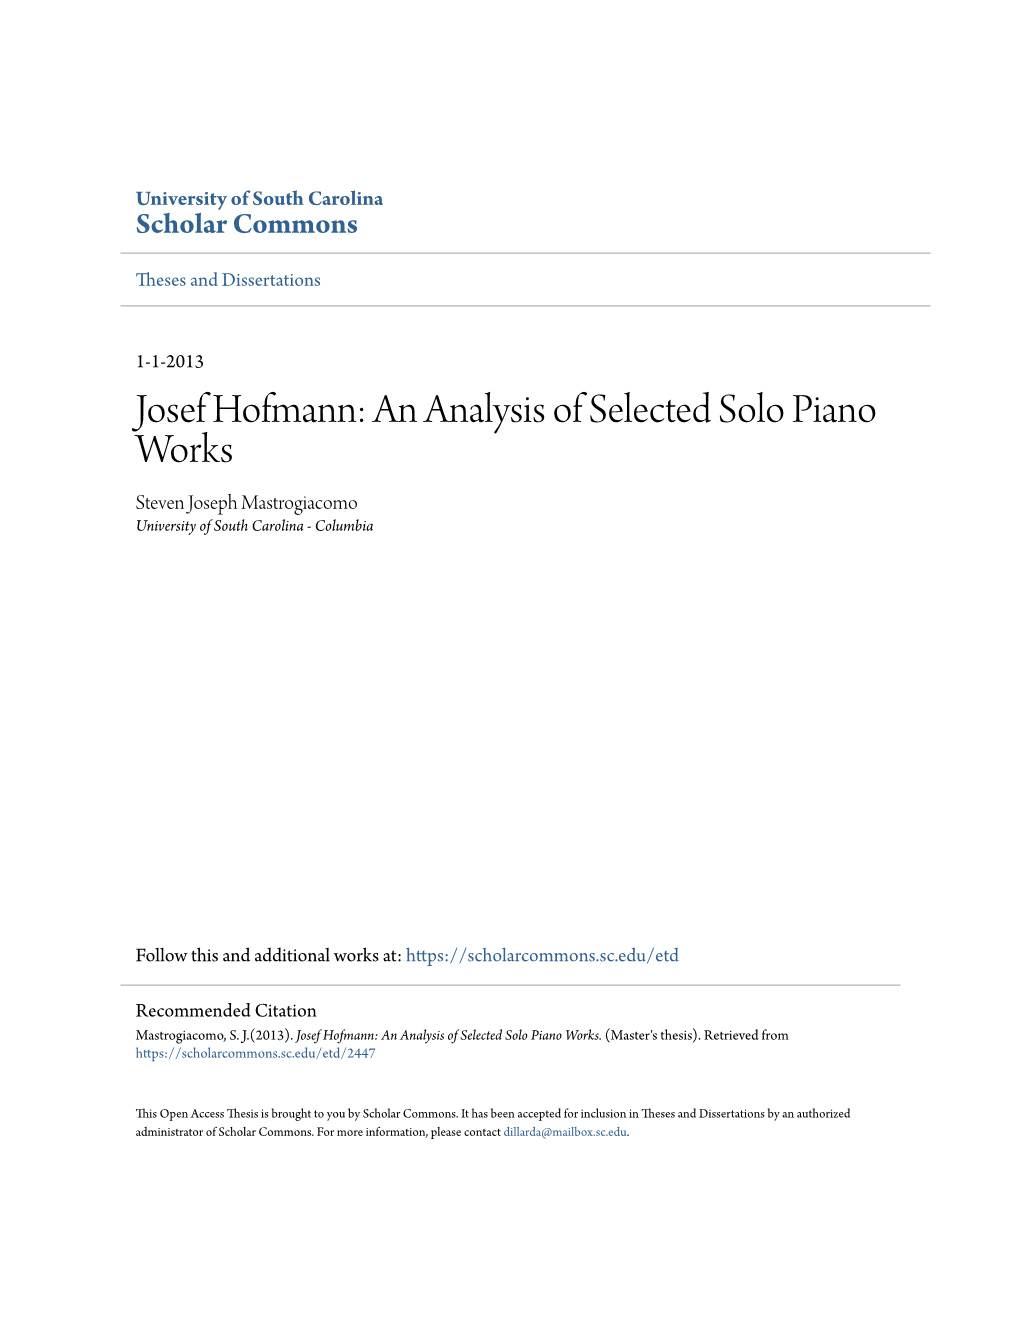 Josef Hofmann: an Analysis of Selected Solo Piano Works Steven Joseph Mastrogiacomo University of South Carolina - Columbia